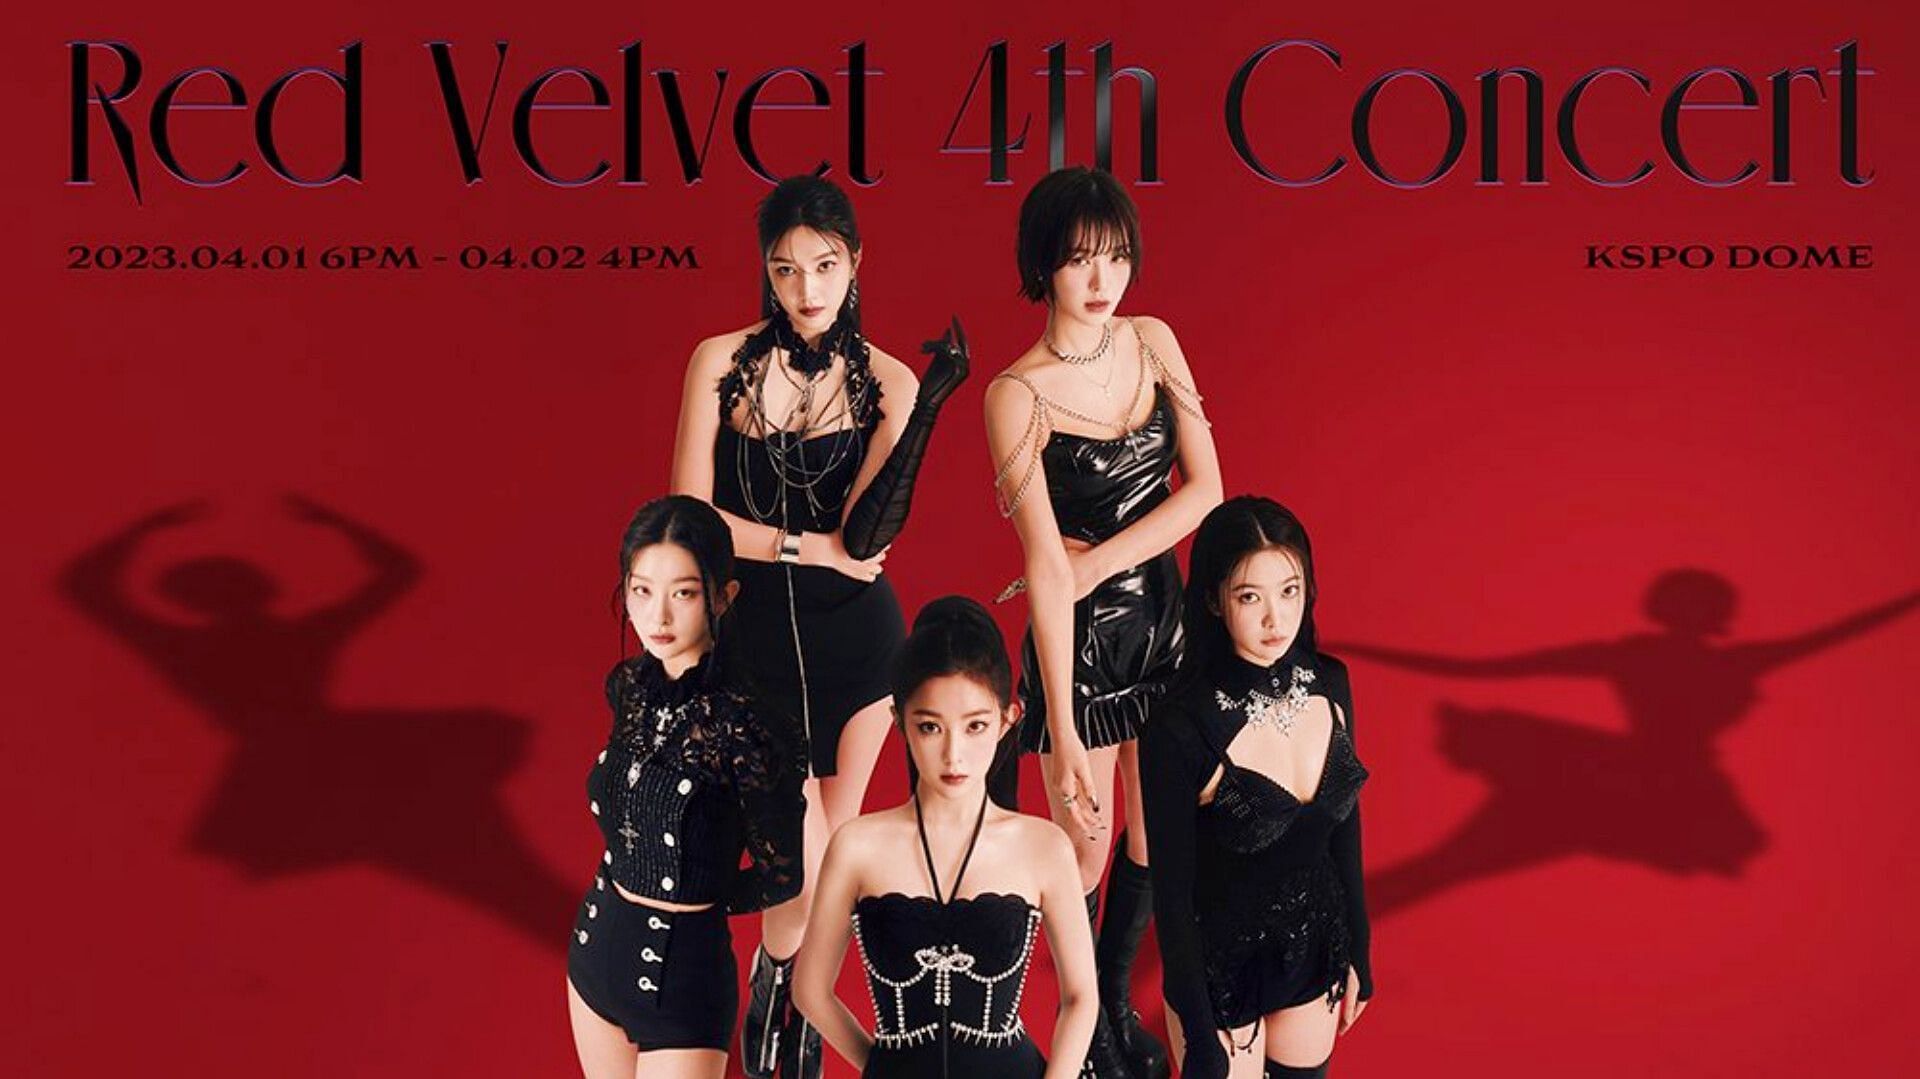 Featuring Red Velvet (Image via SM Entertainment)